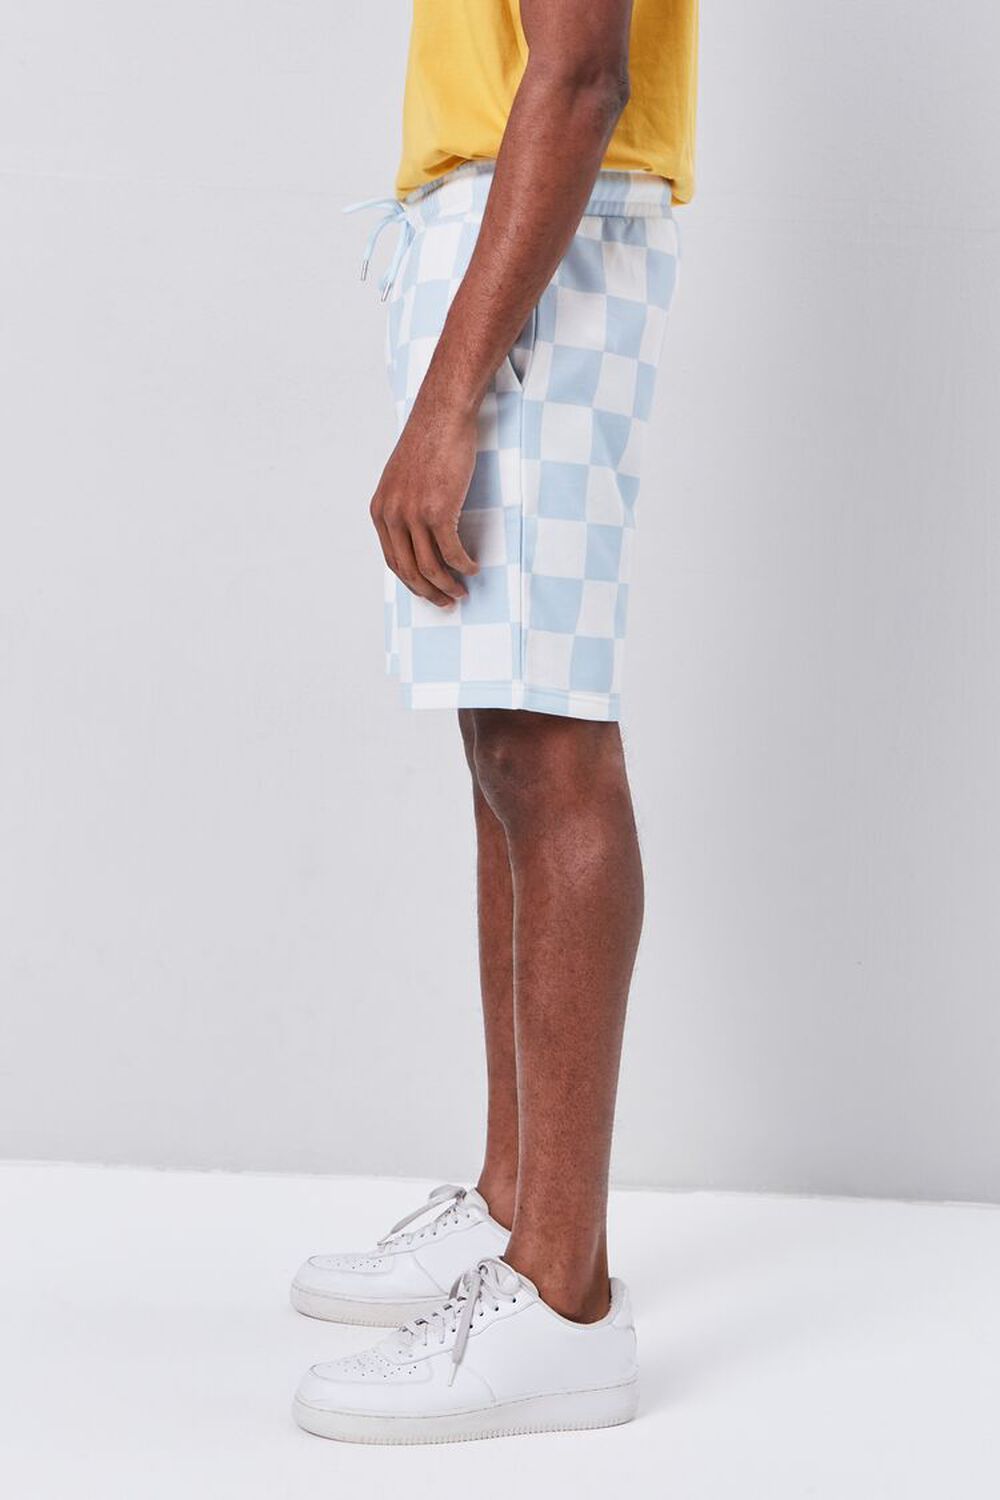 WHITE/BLUE Checkered Drawstring Shorts, image 3